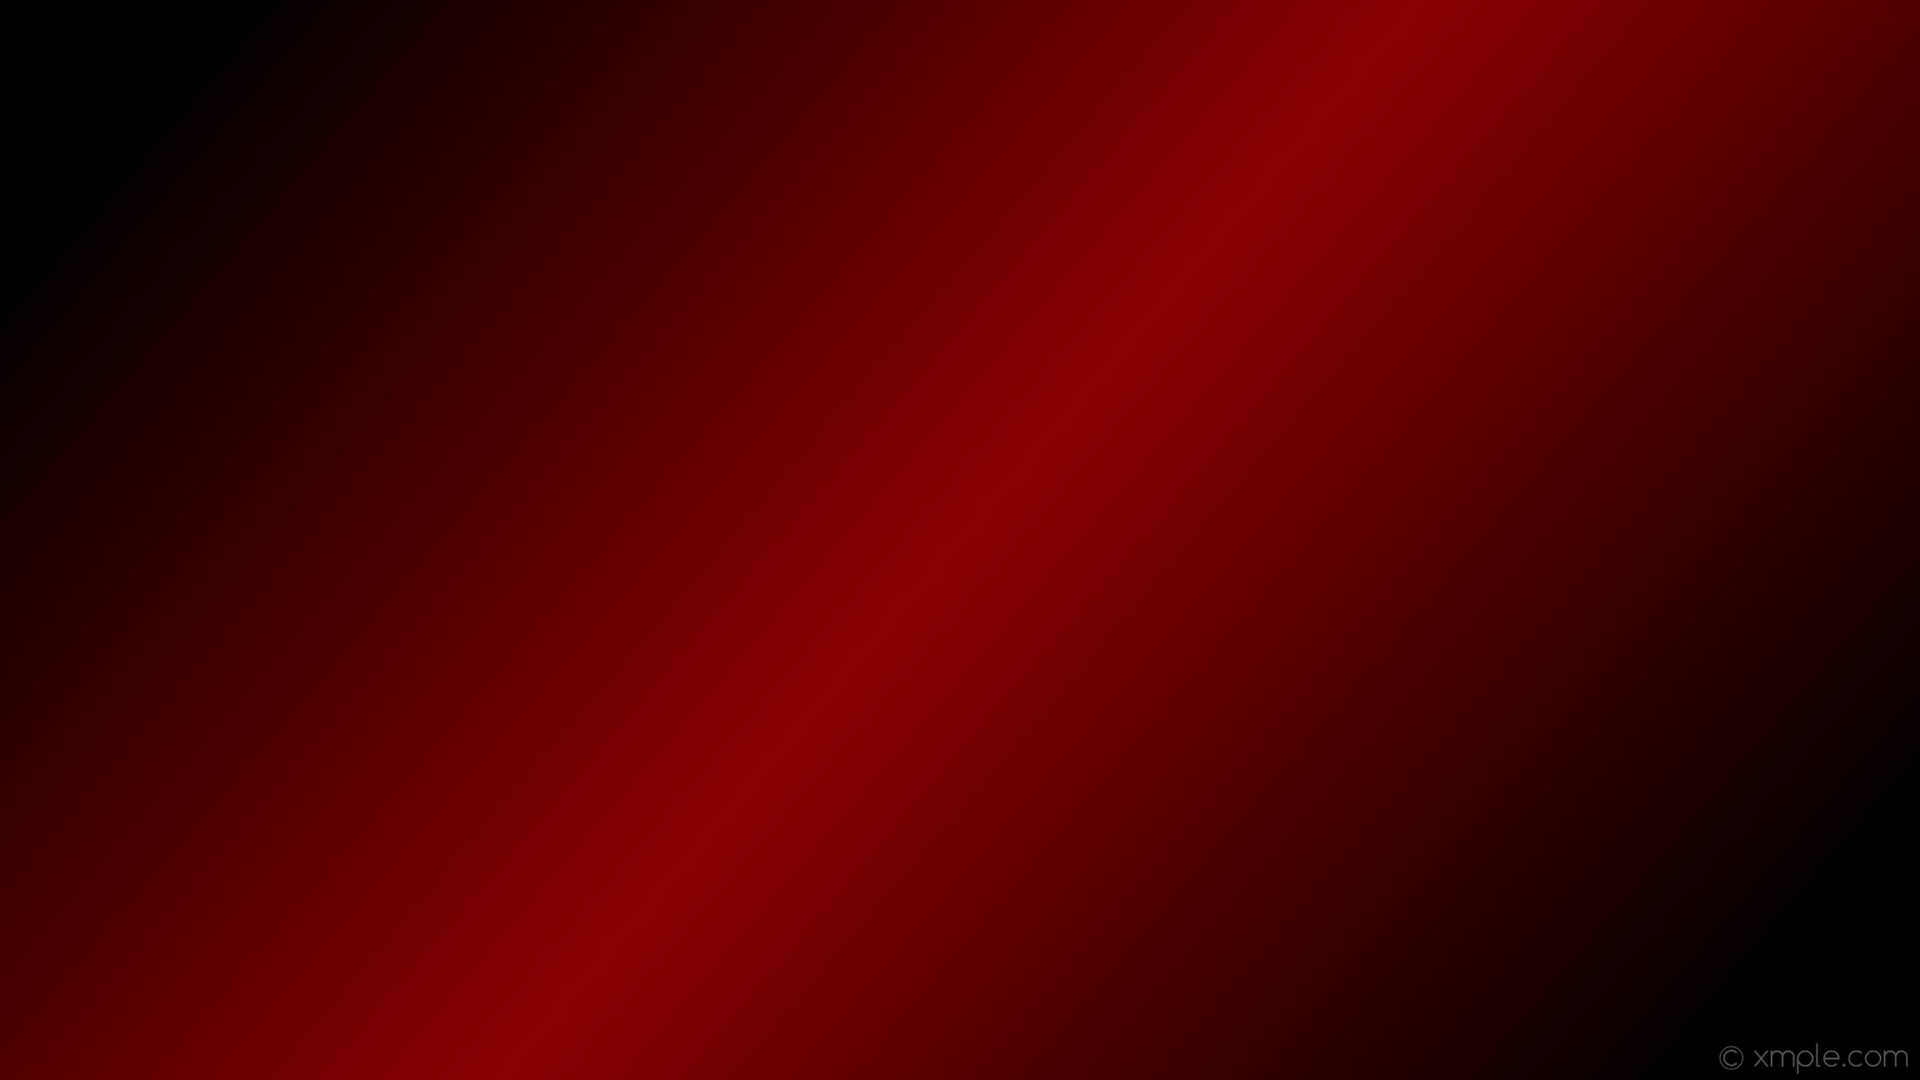 1920x1080 wallpaper linear black red gradient highlight dark red #000000 #8b0000 345Â°  50%